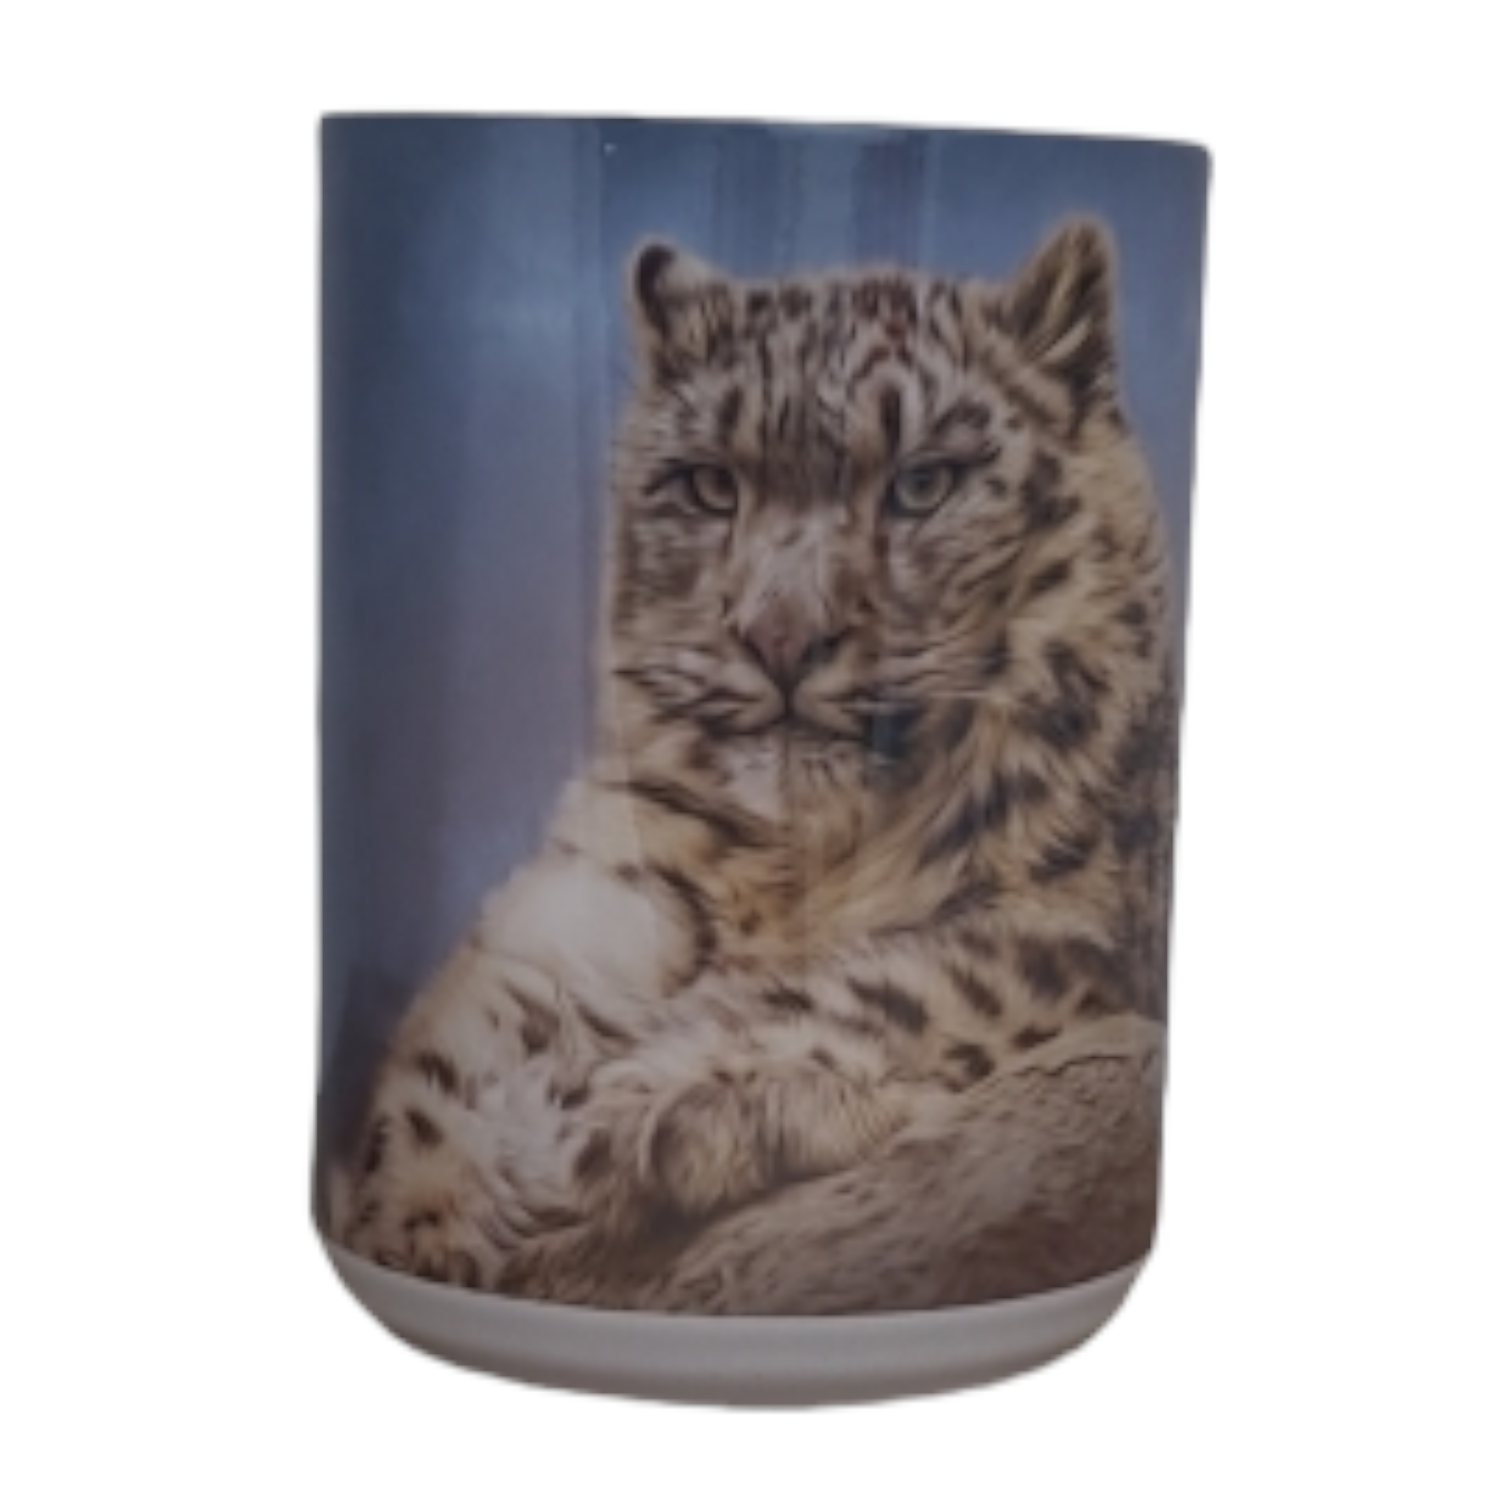 Mok Towering Presence - Snow Leopard